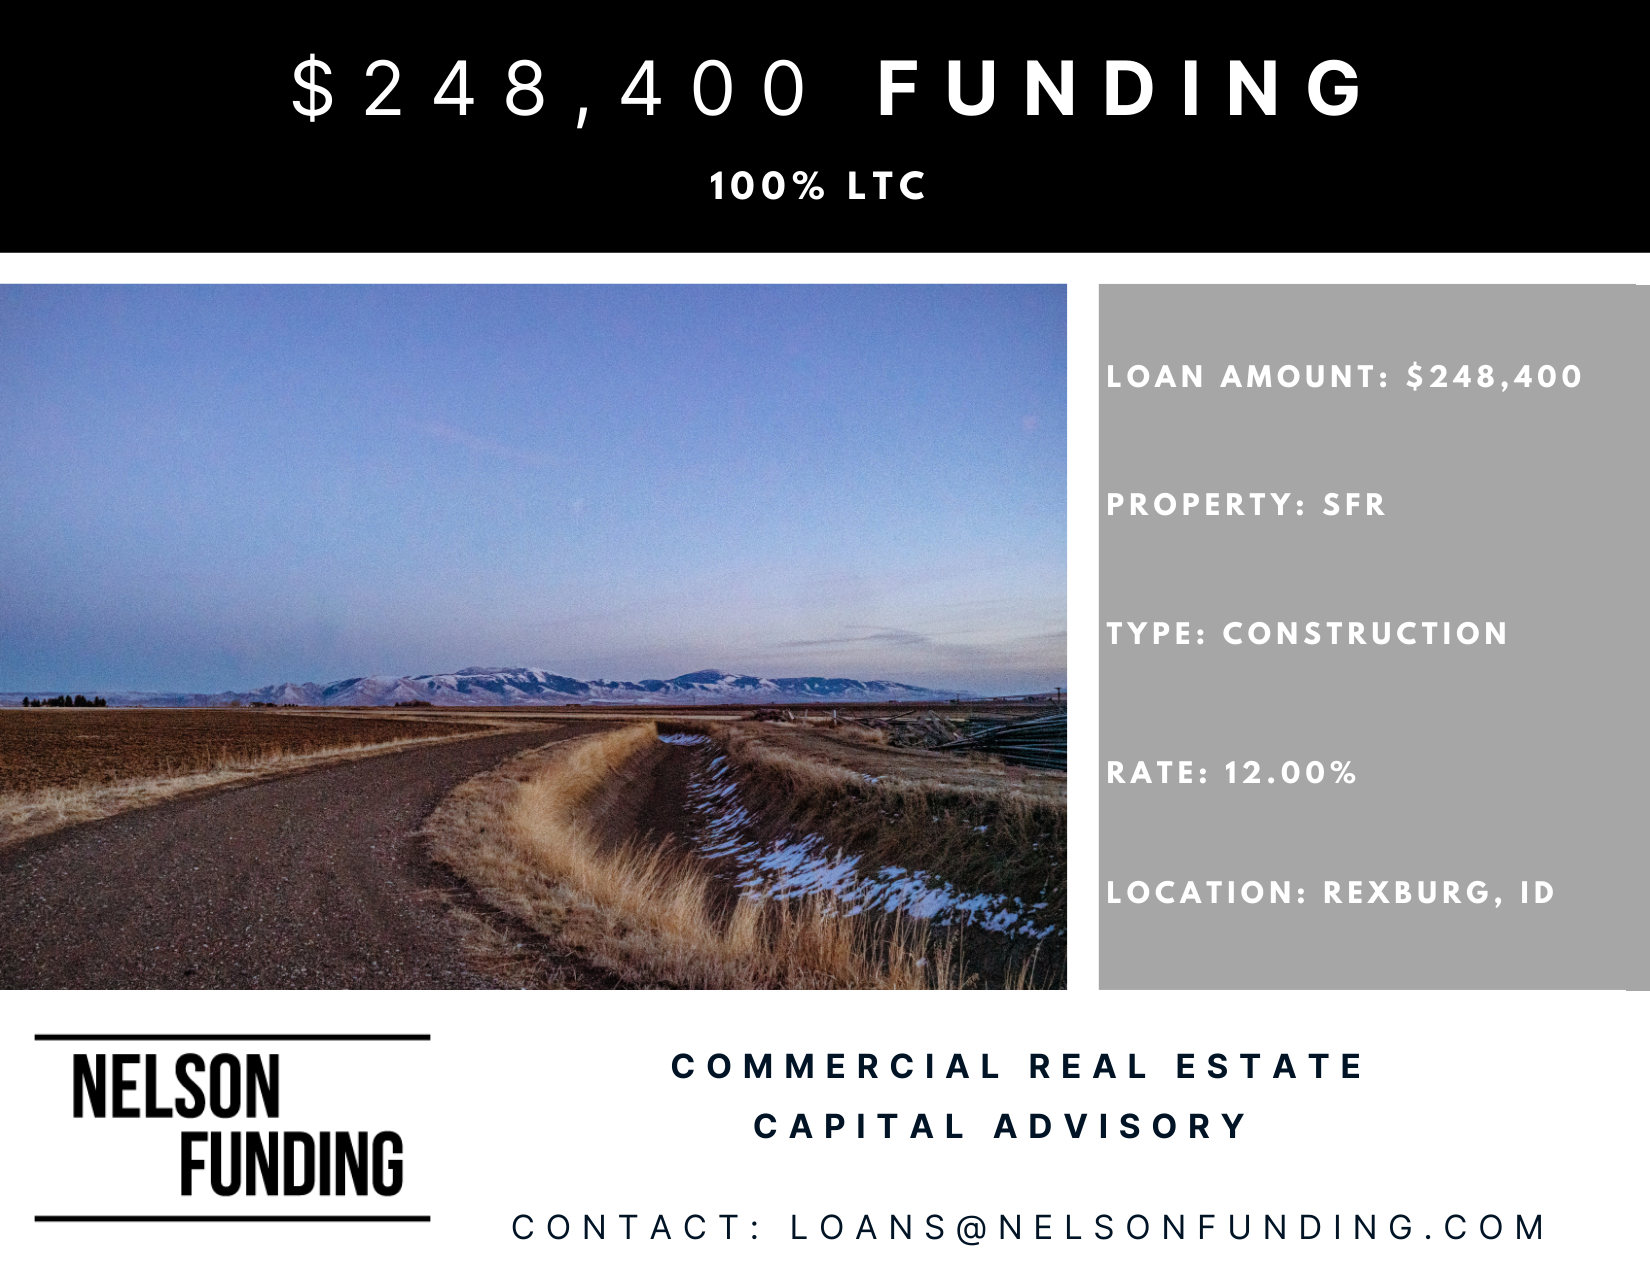 Nelson Funding Closes 100% LTC Loan in Rexburg, Idaho